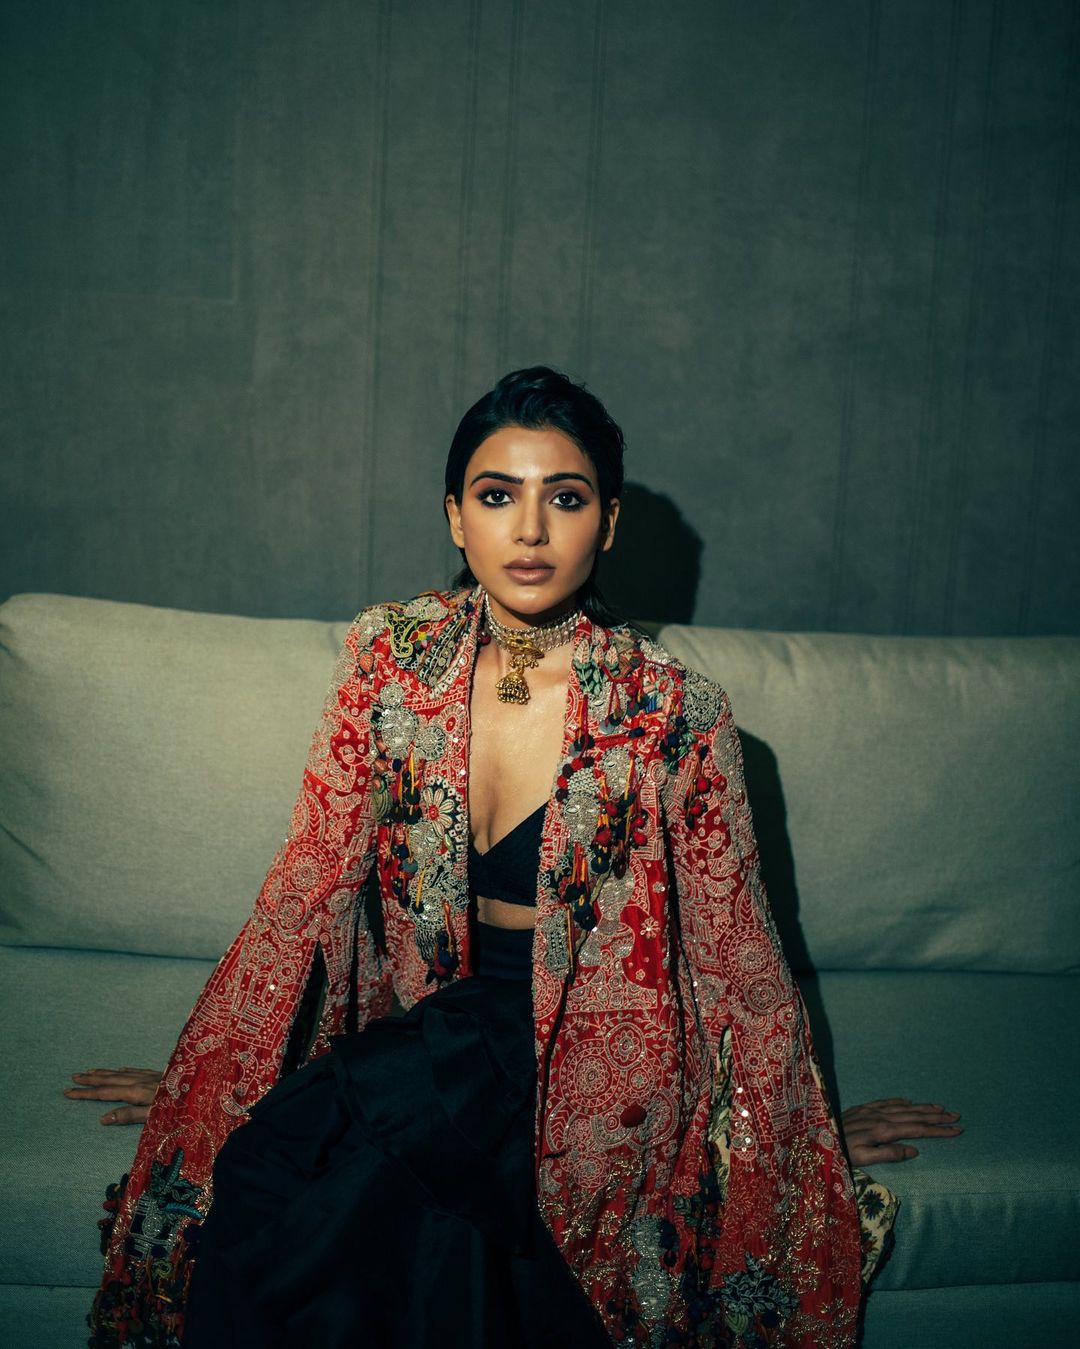 Samantha Ruth Prabhu flaunts her cleavage in the black bralette